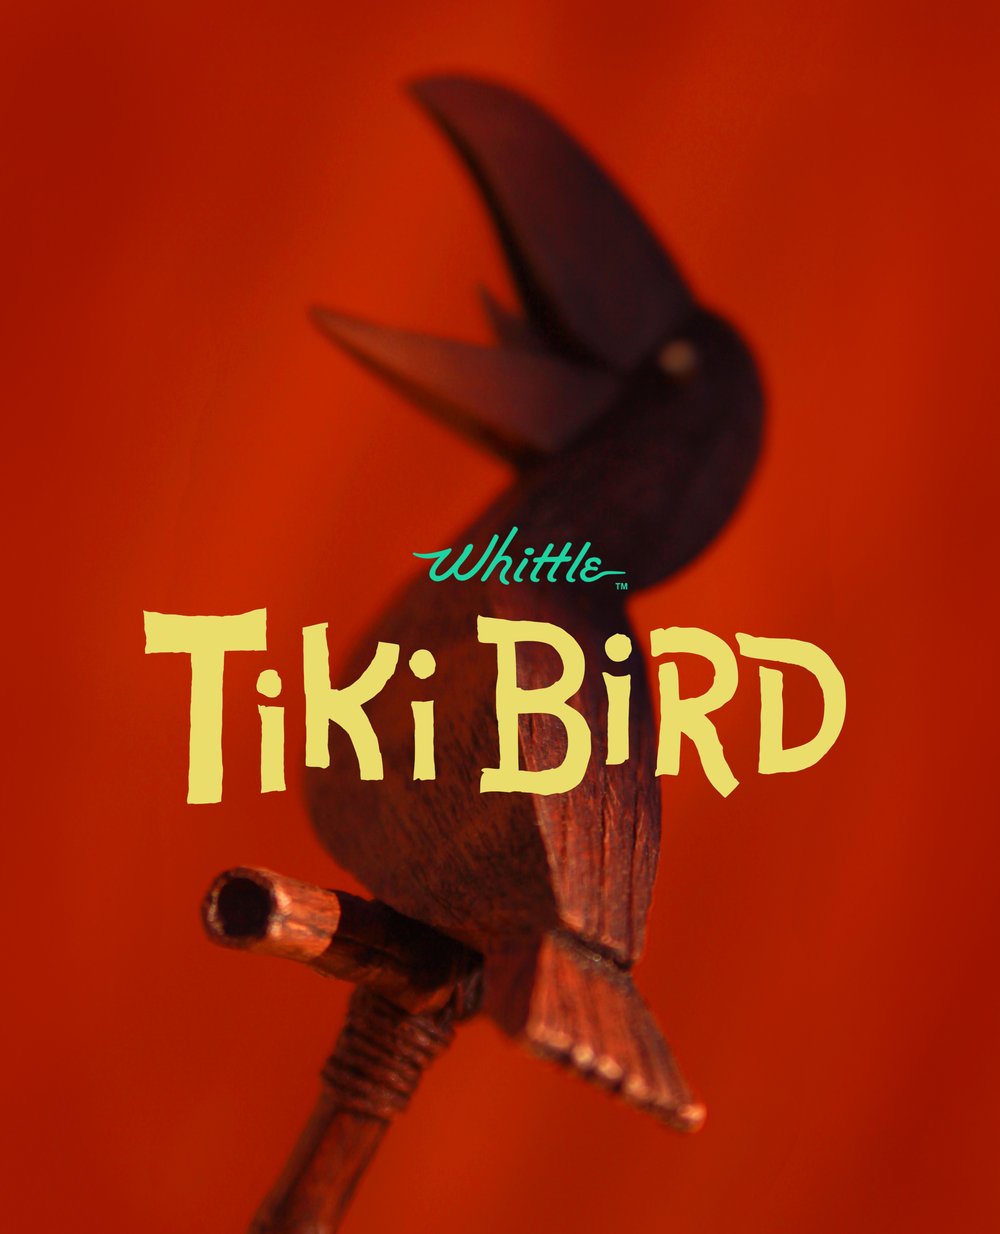 Image of Whittle Tiki Bird